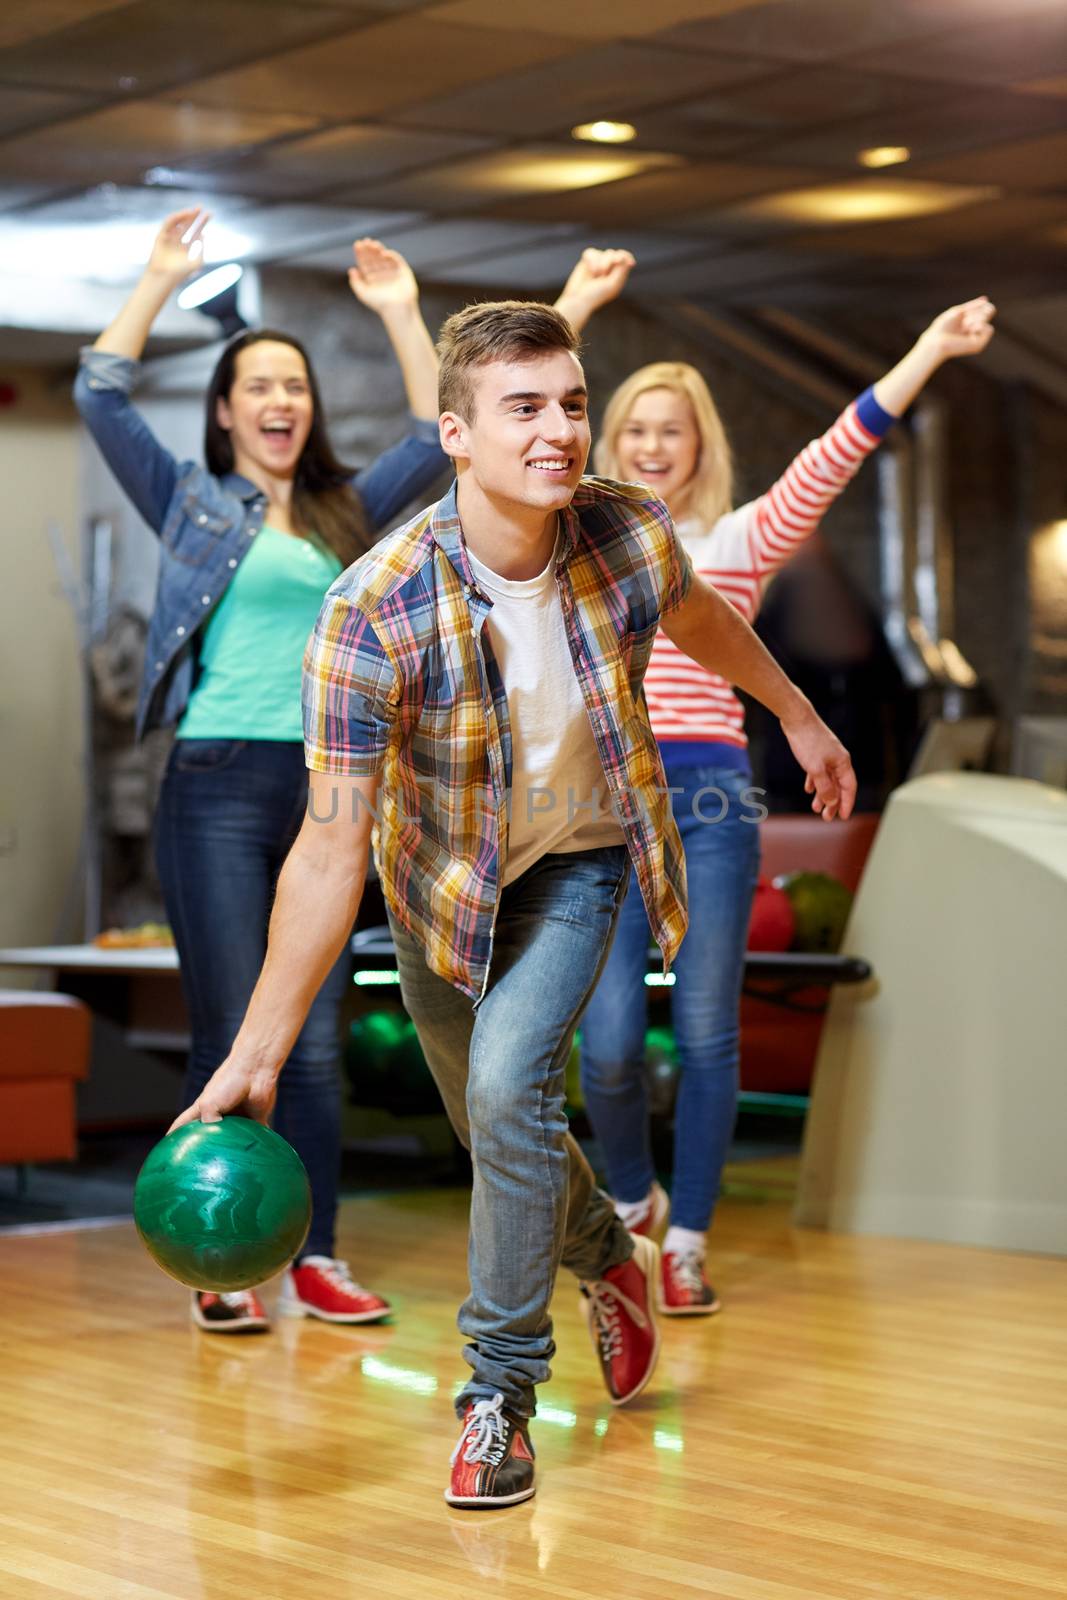 happy young man throwing ball in bowling club by dolgachov